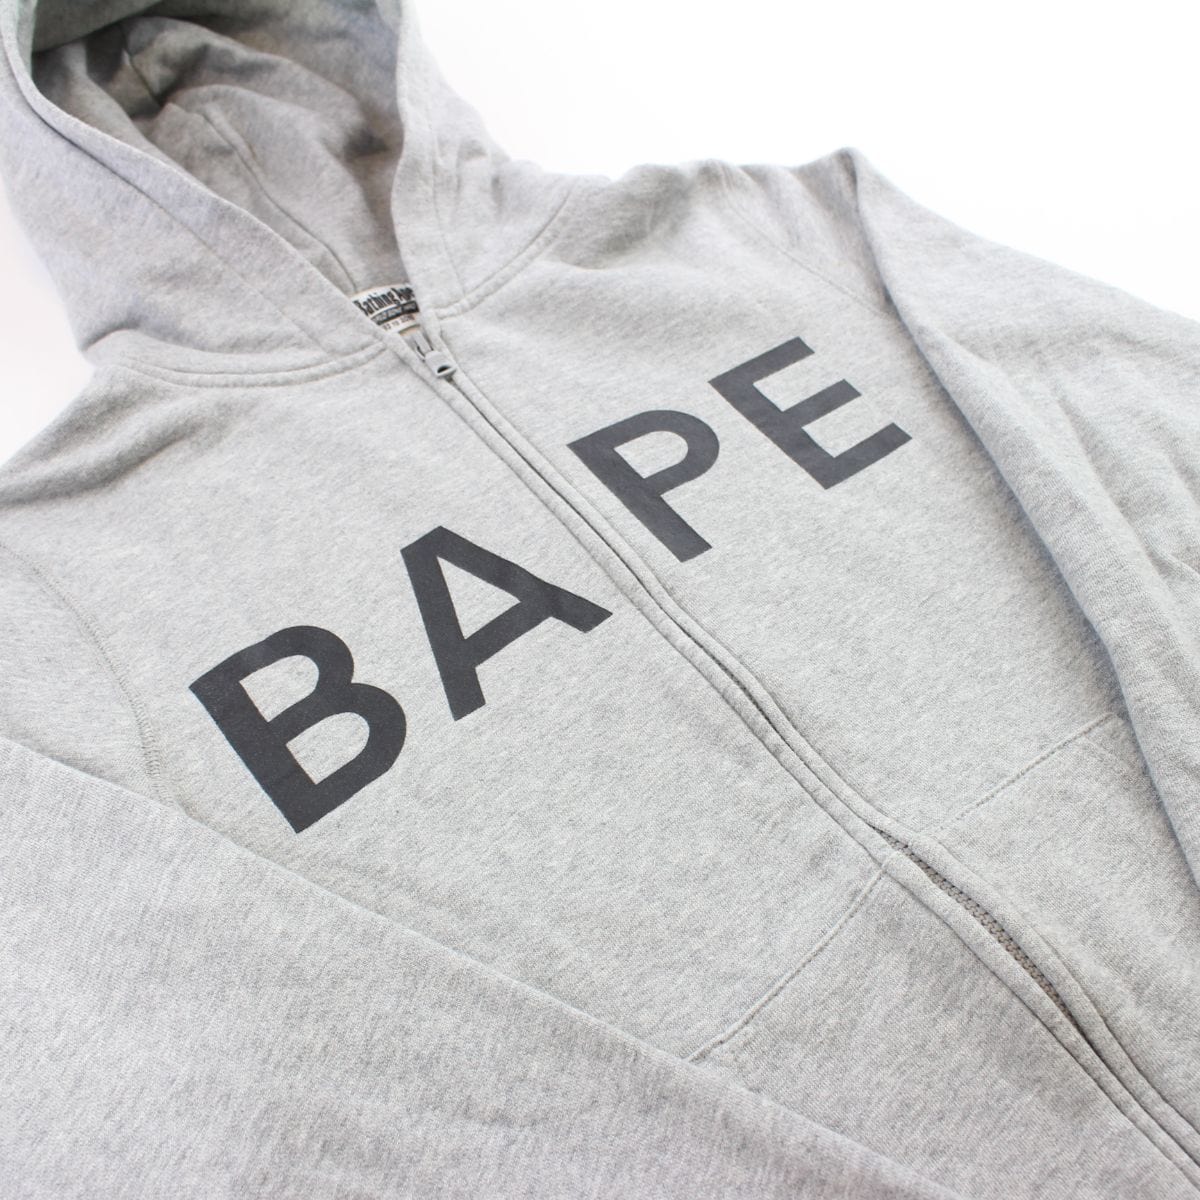 Bape Black Text Logo Hoodie Grey - SaruGeneral